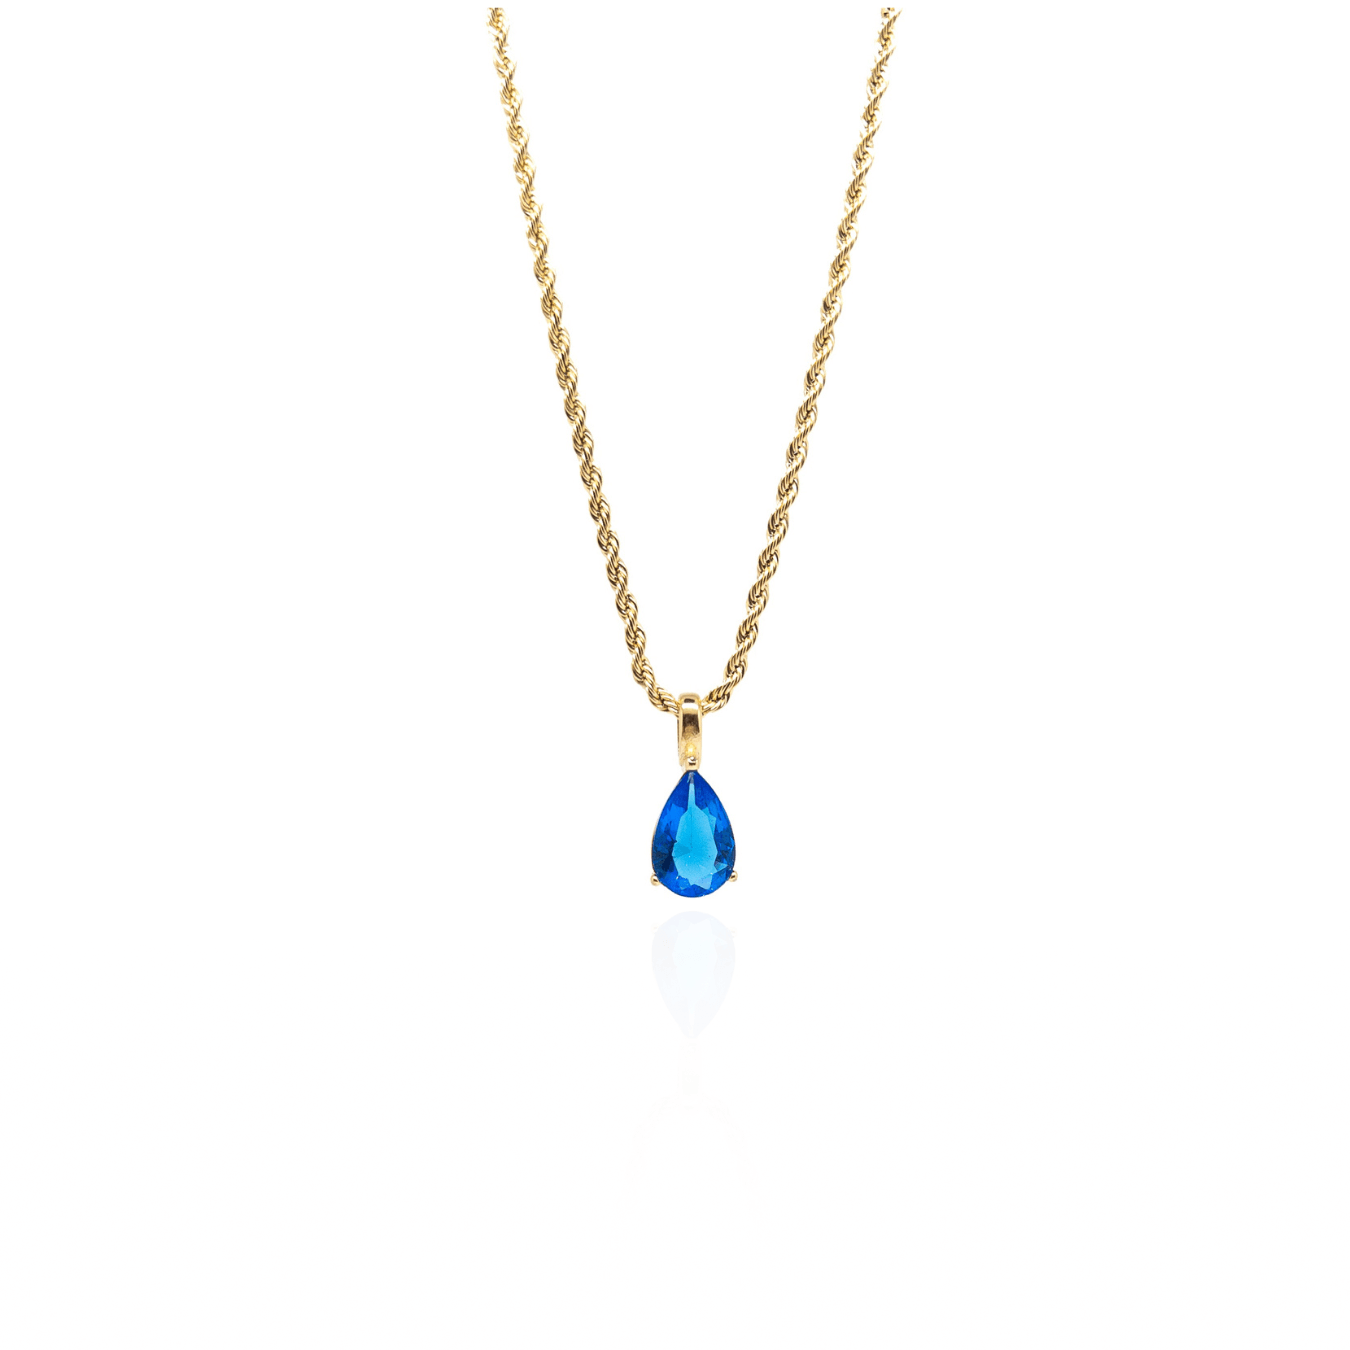 The Blue Drop necklace